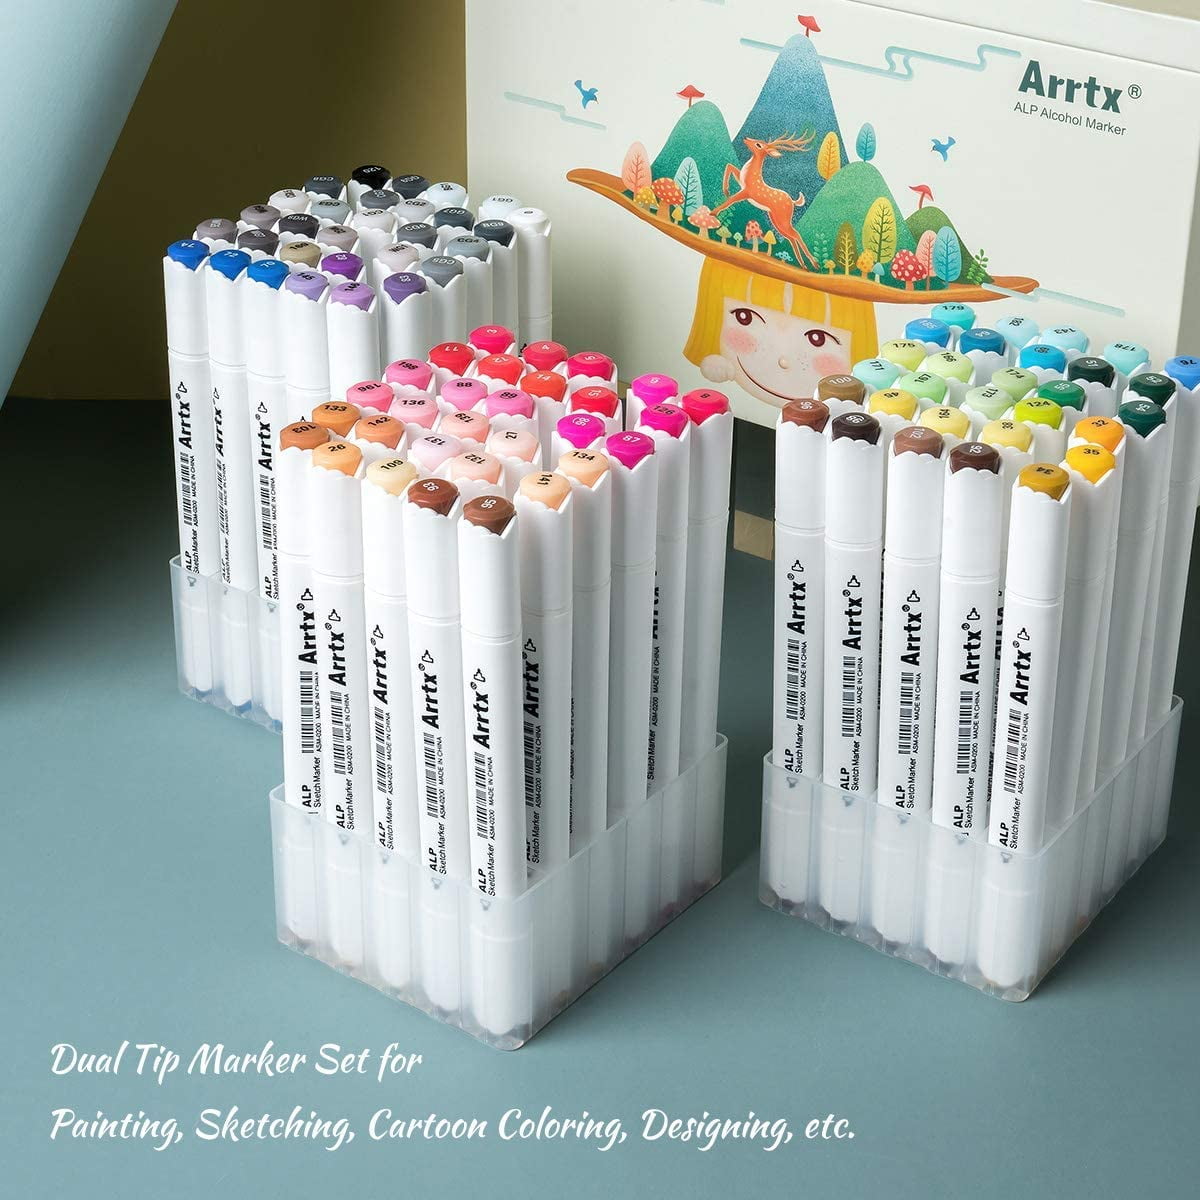 Arrtx Blue Ocean Tone 20 colori Arrtx Marker Set doppia punta Twin Penne Permanent Alcohol Based Art Markers Pen per Portrait Illustration Sketching Drawing Coloring 